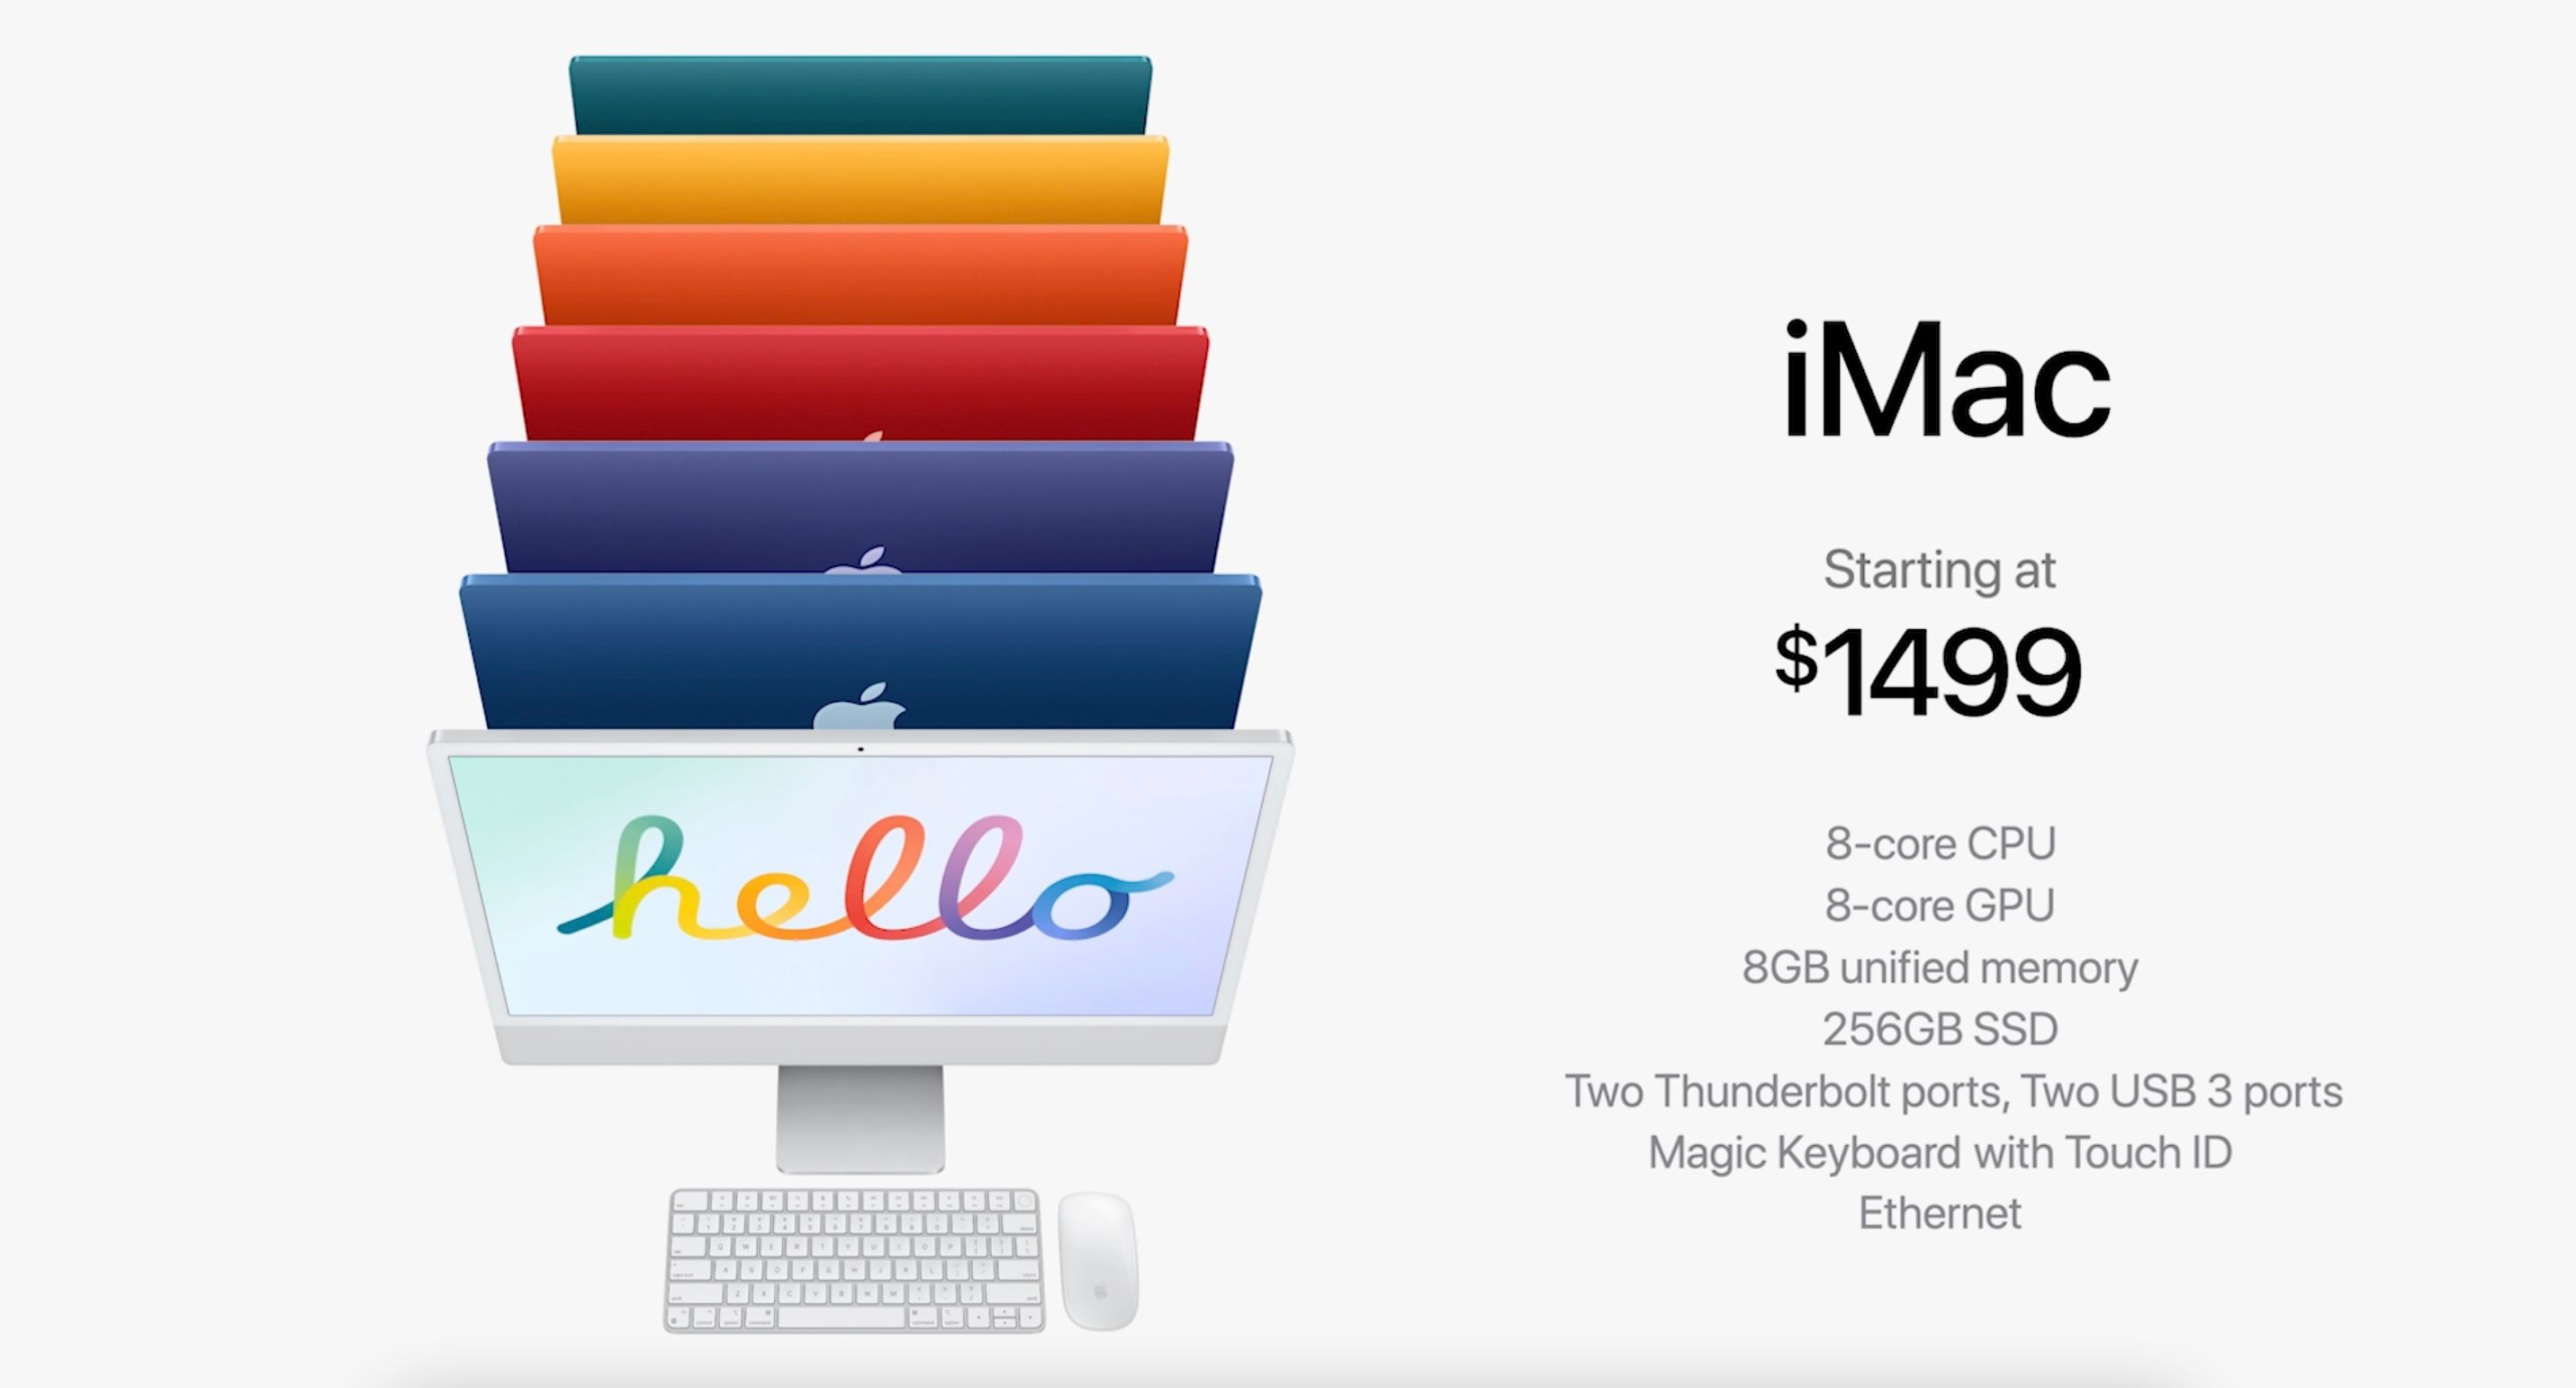 iMac pricing